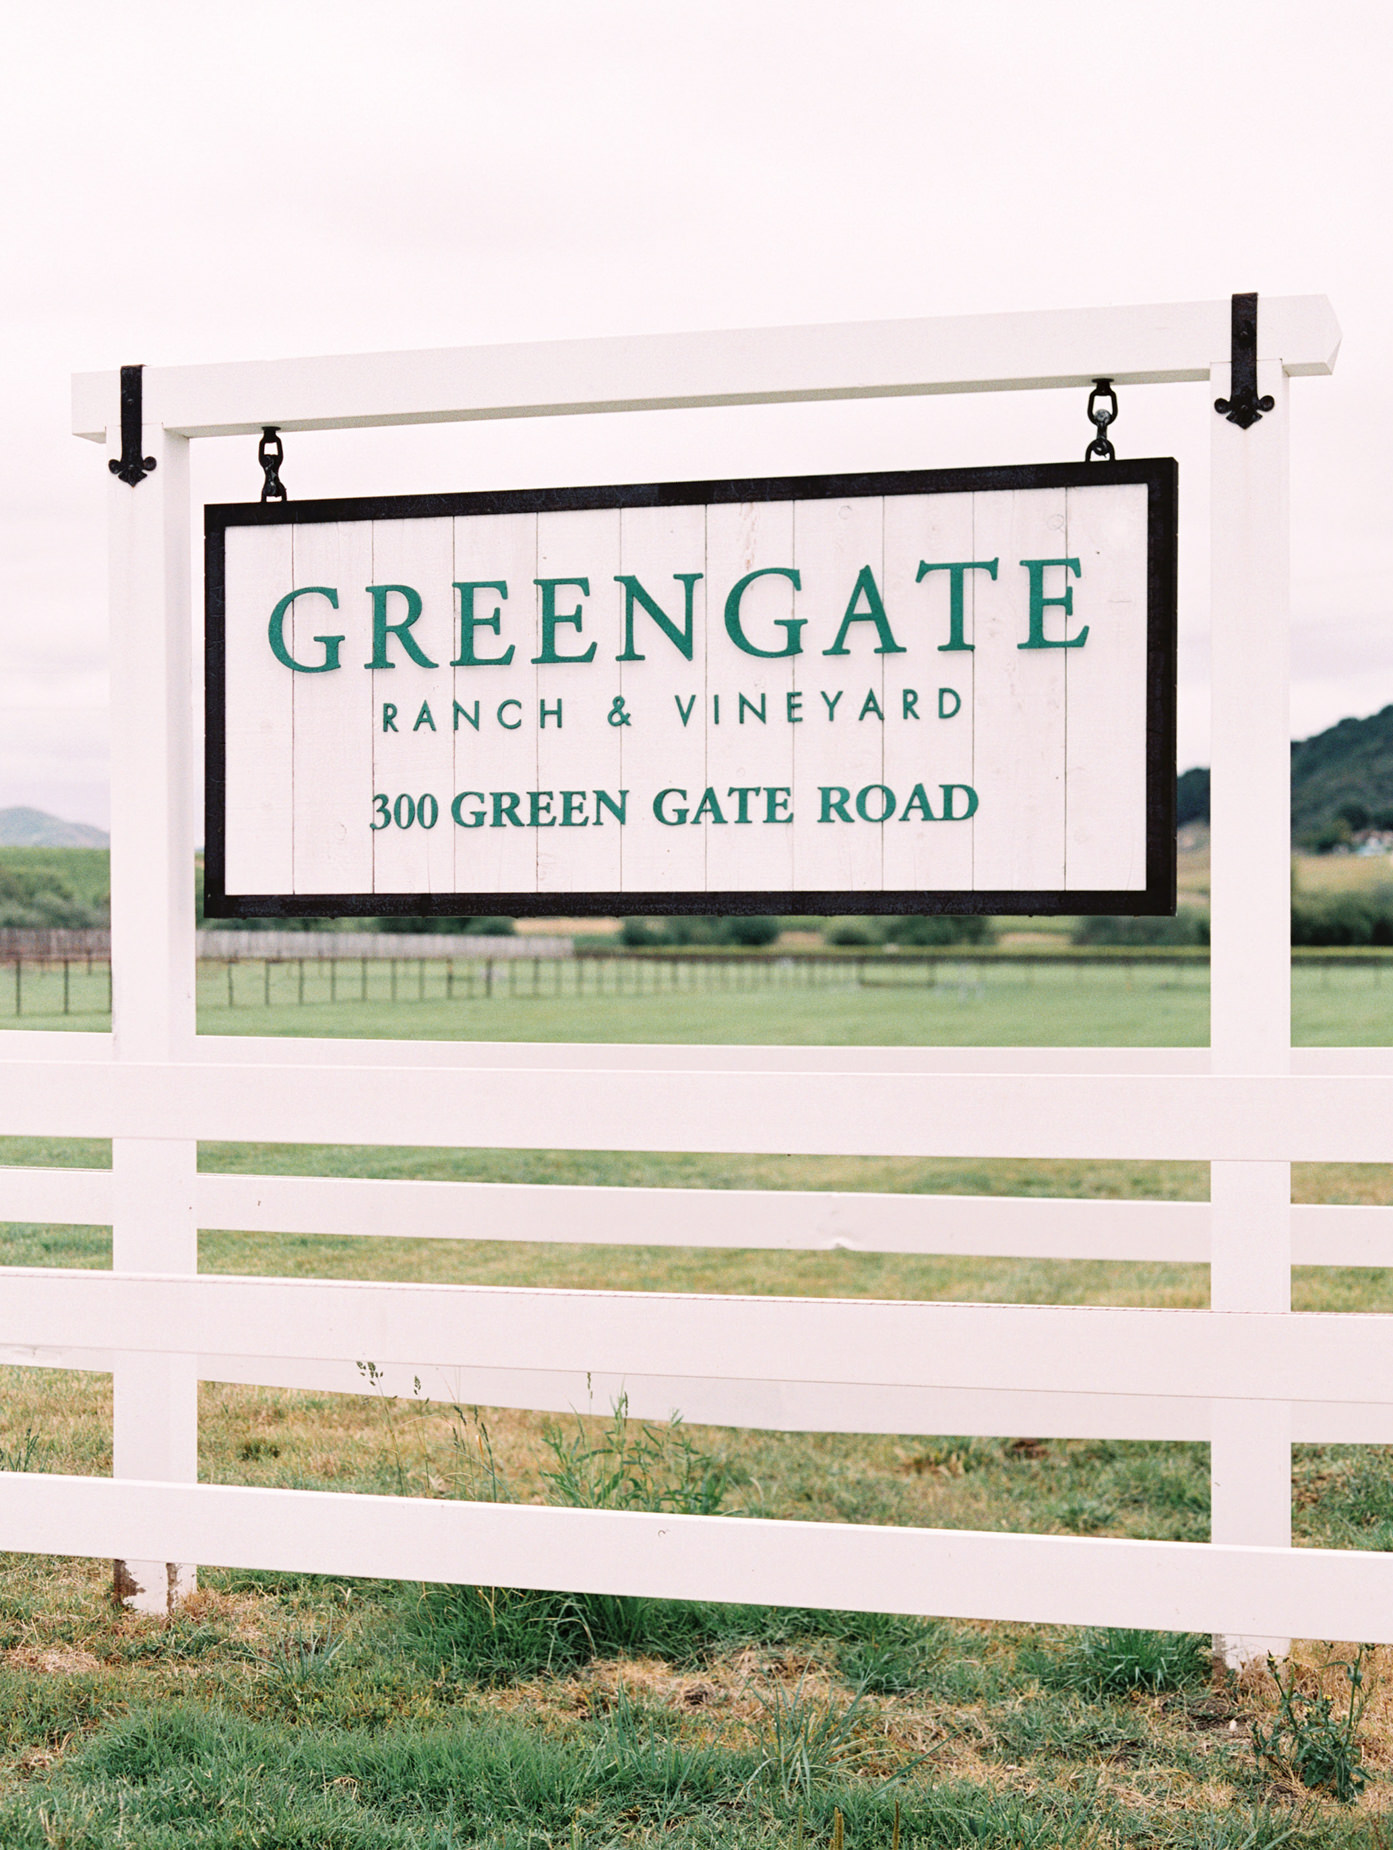 Greengate Ranch wedding photographer captures sign image